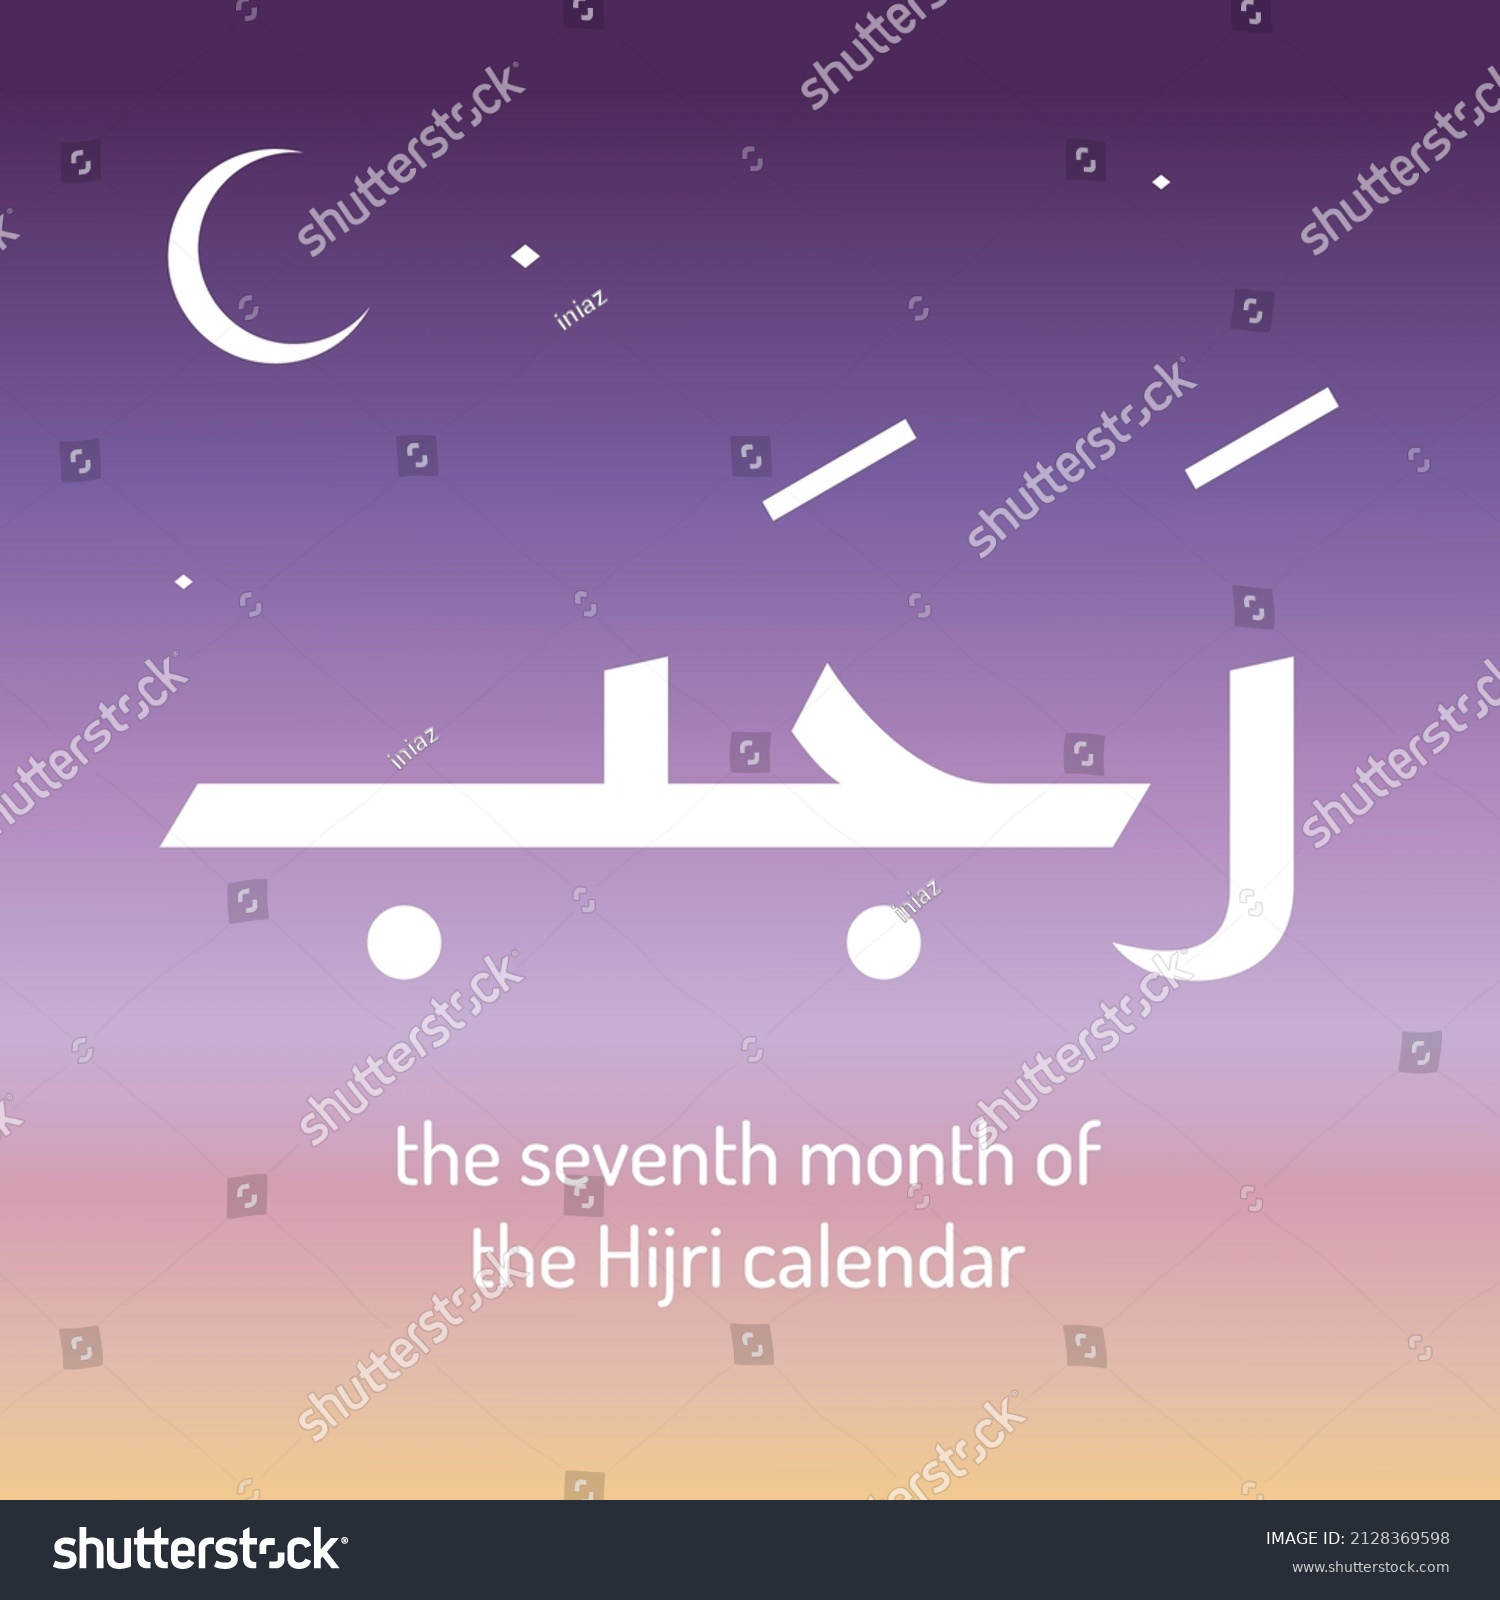 Rajab Seventh Month Islamic Calendar Classical Stock Vector (Royalty